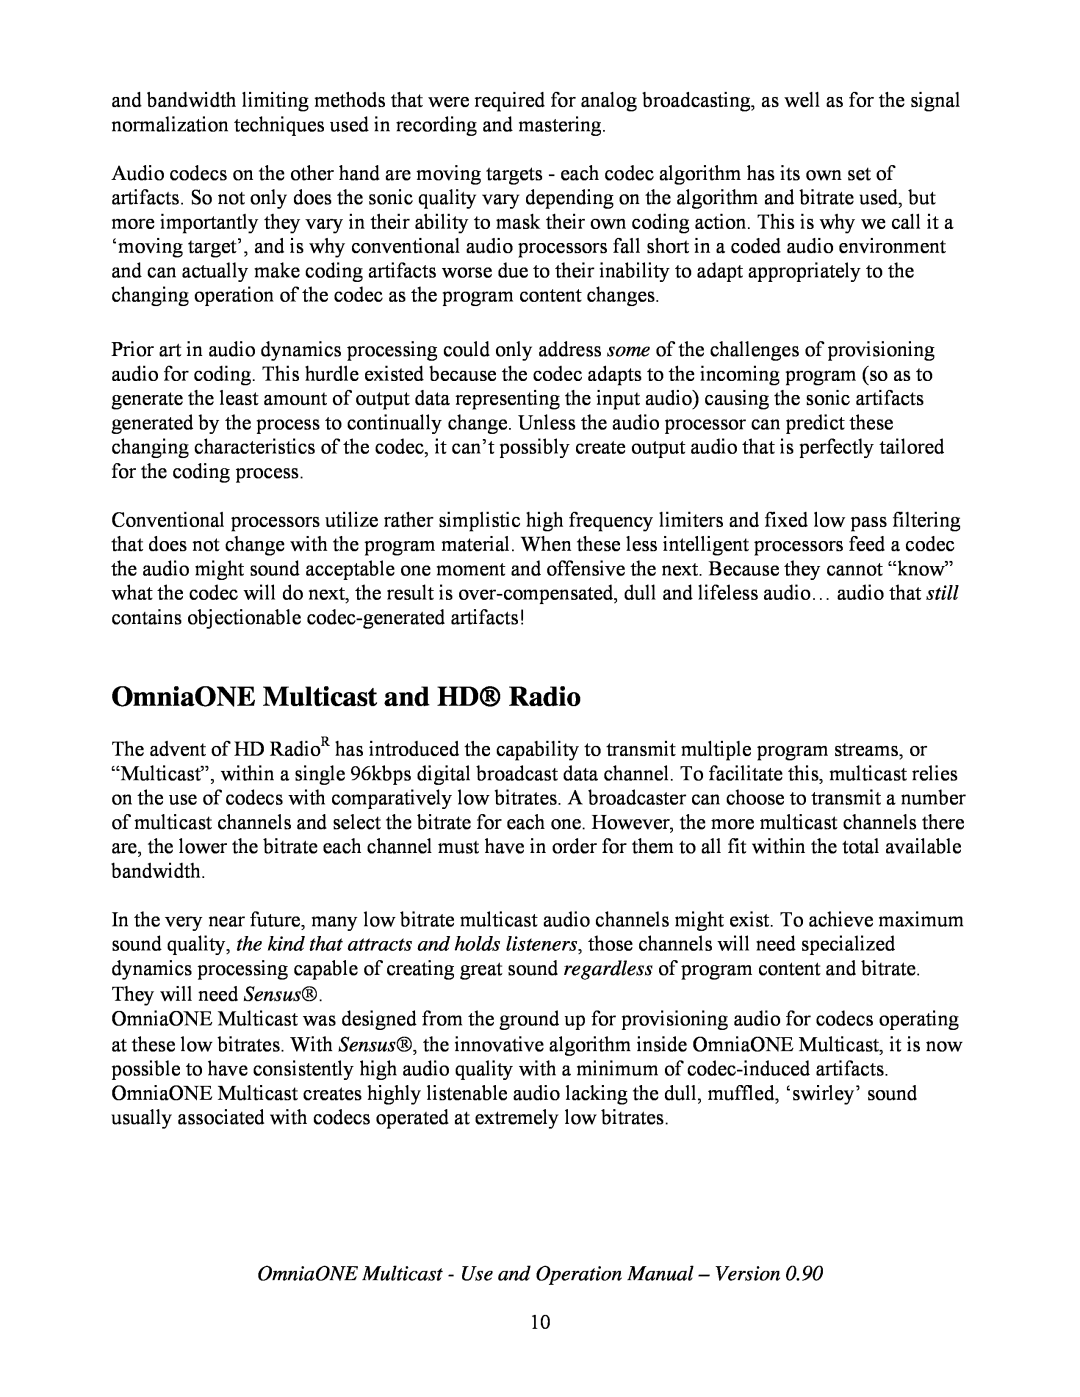 New Media Technology Omnia ONE Multicast manual OmniaONE Multicast and HD→ Radio 